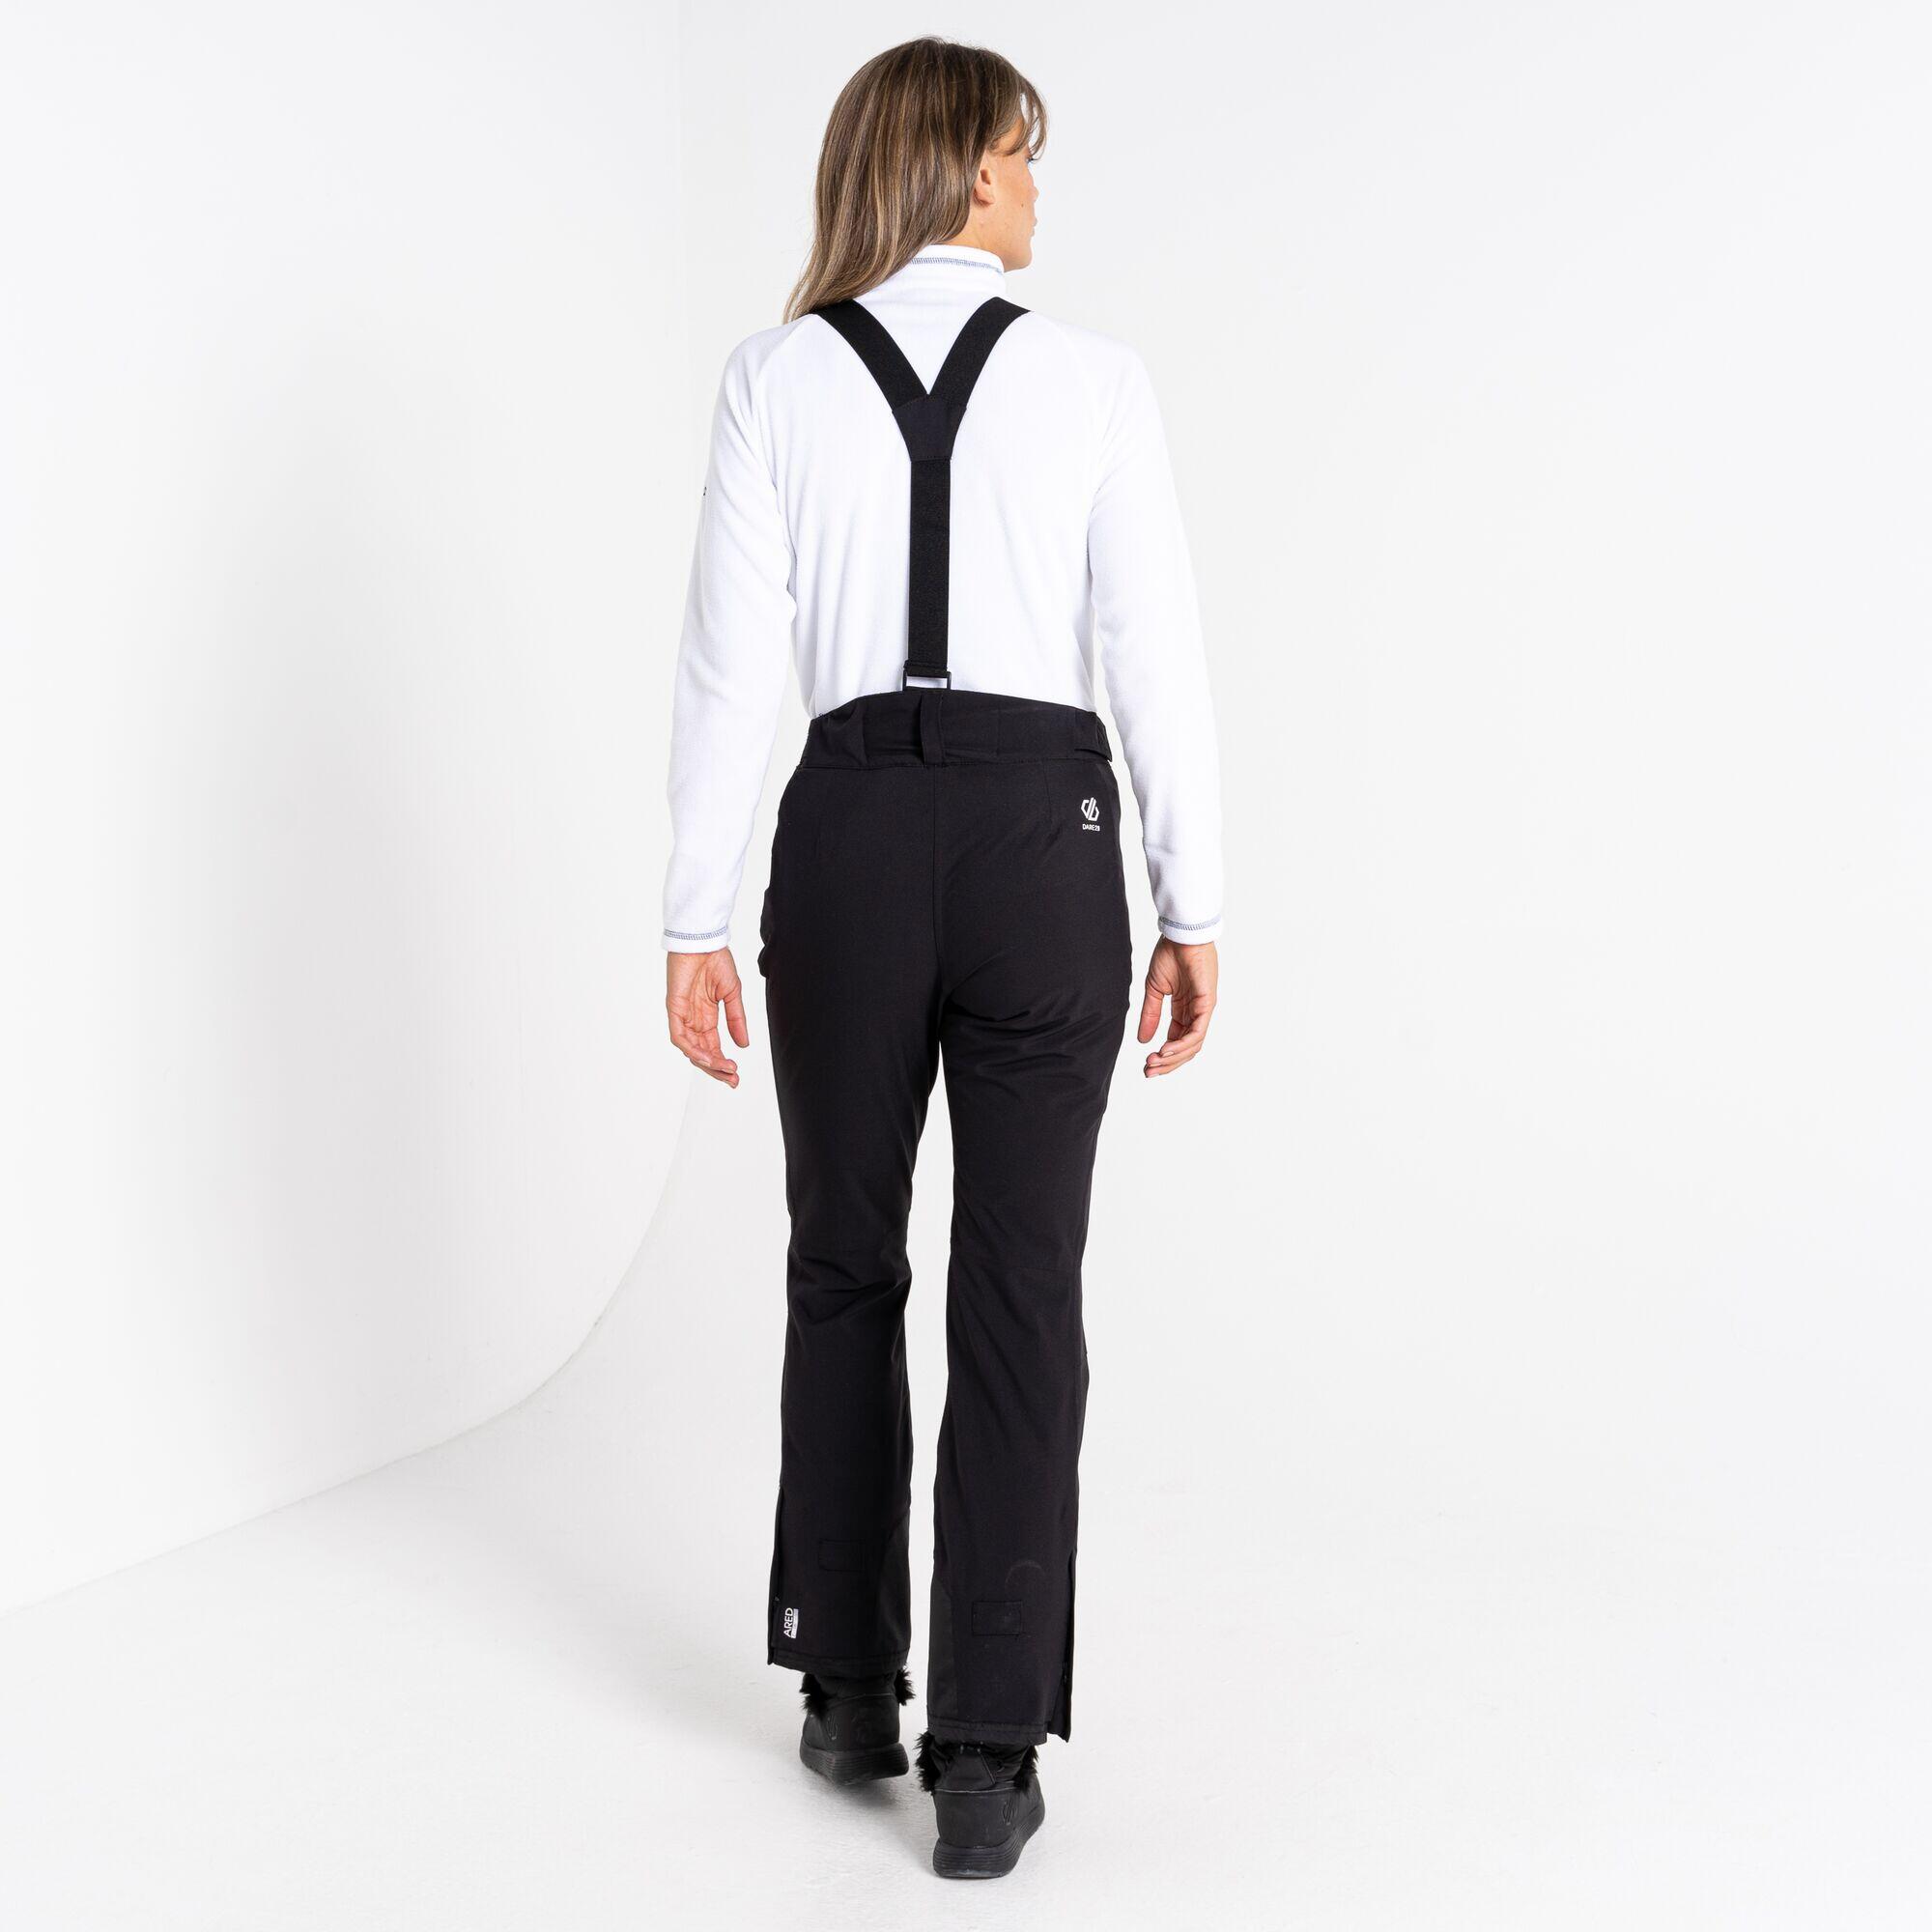 Effused Women's Ski Pants - Insulated - Black 5/5